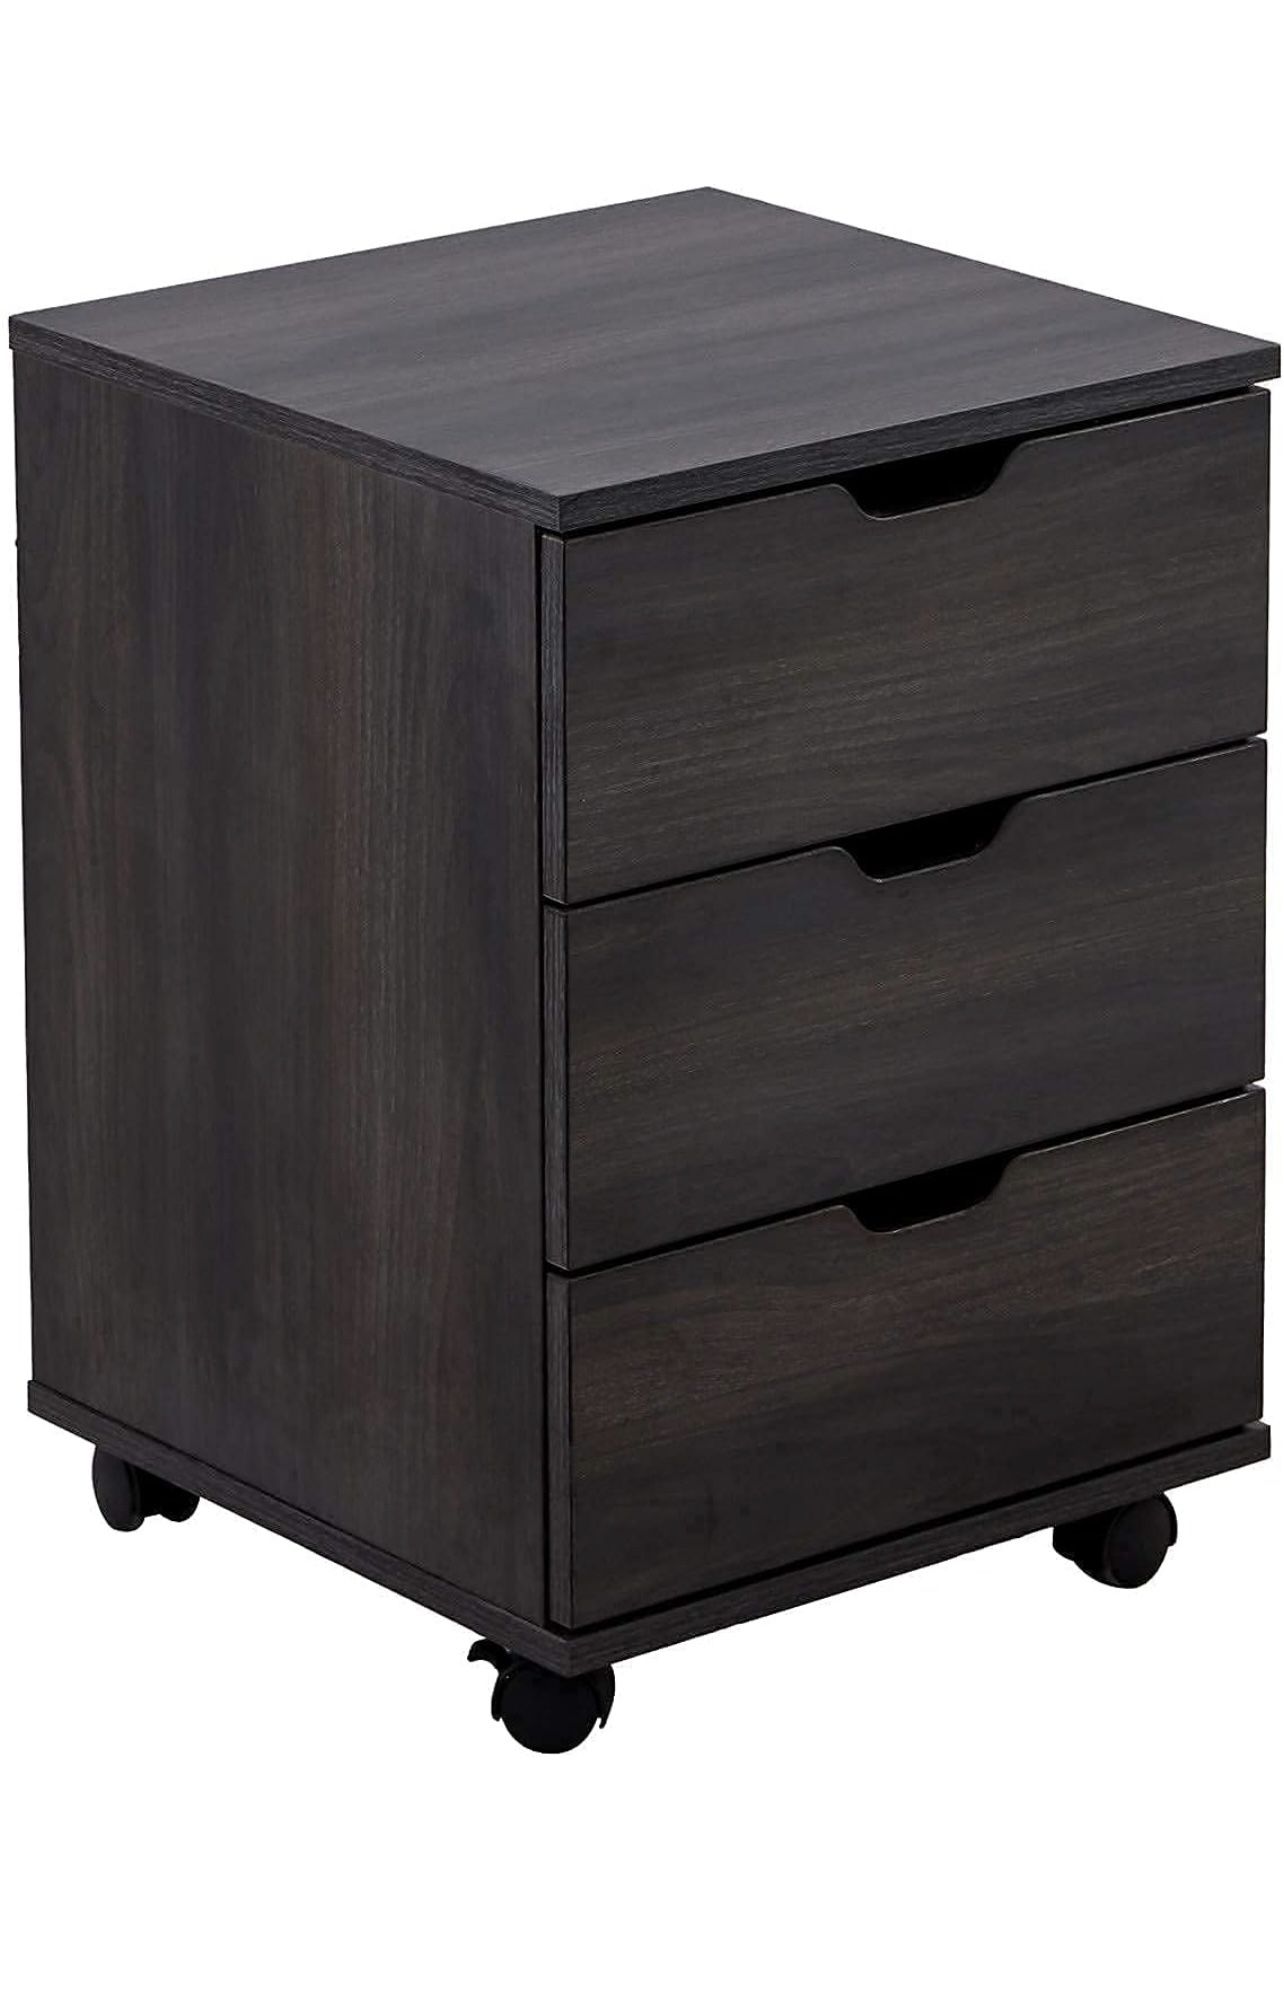 3 Drawer Wood Rolling Office Filing Cabinet for Desk (Dark Walnut)